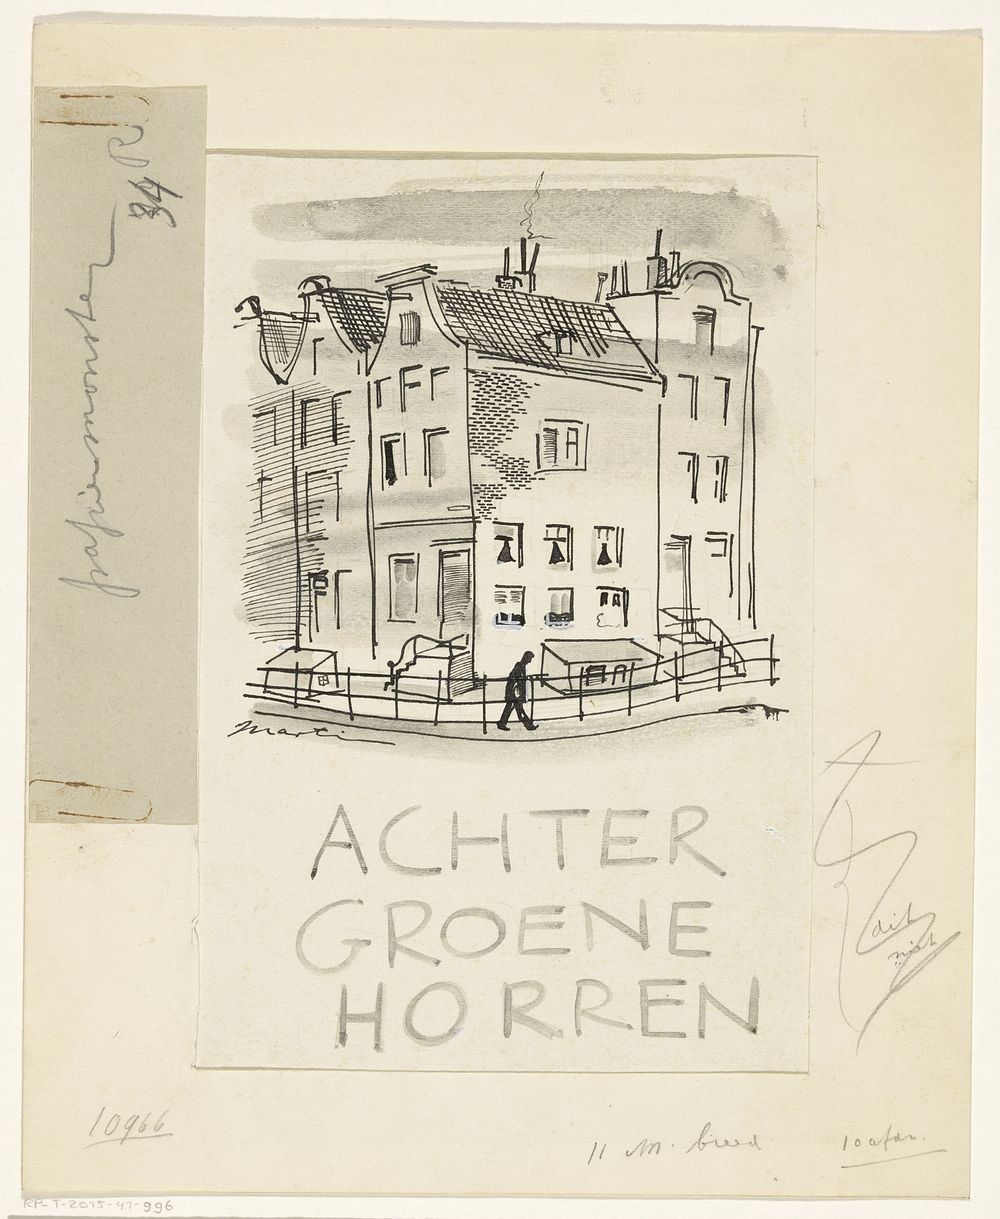 Bandontwerp voor: J. van Oudshoorn, Achter groene horren, 1943-1945 (in or before 1943 - in or before 1945) by Martin Horwitz